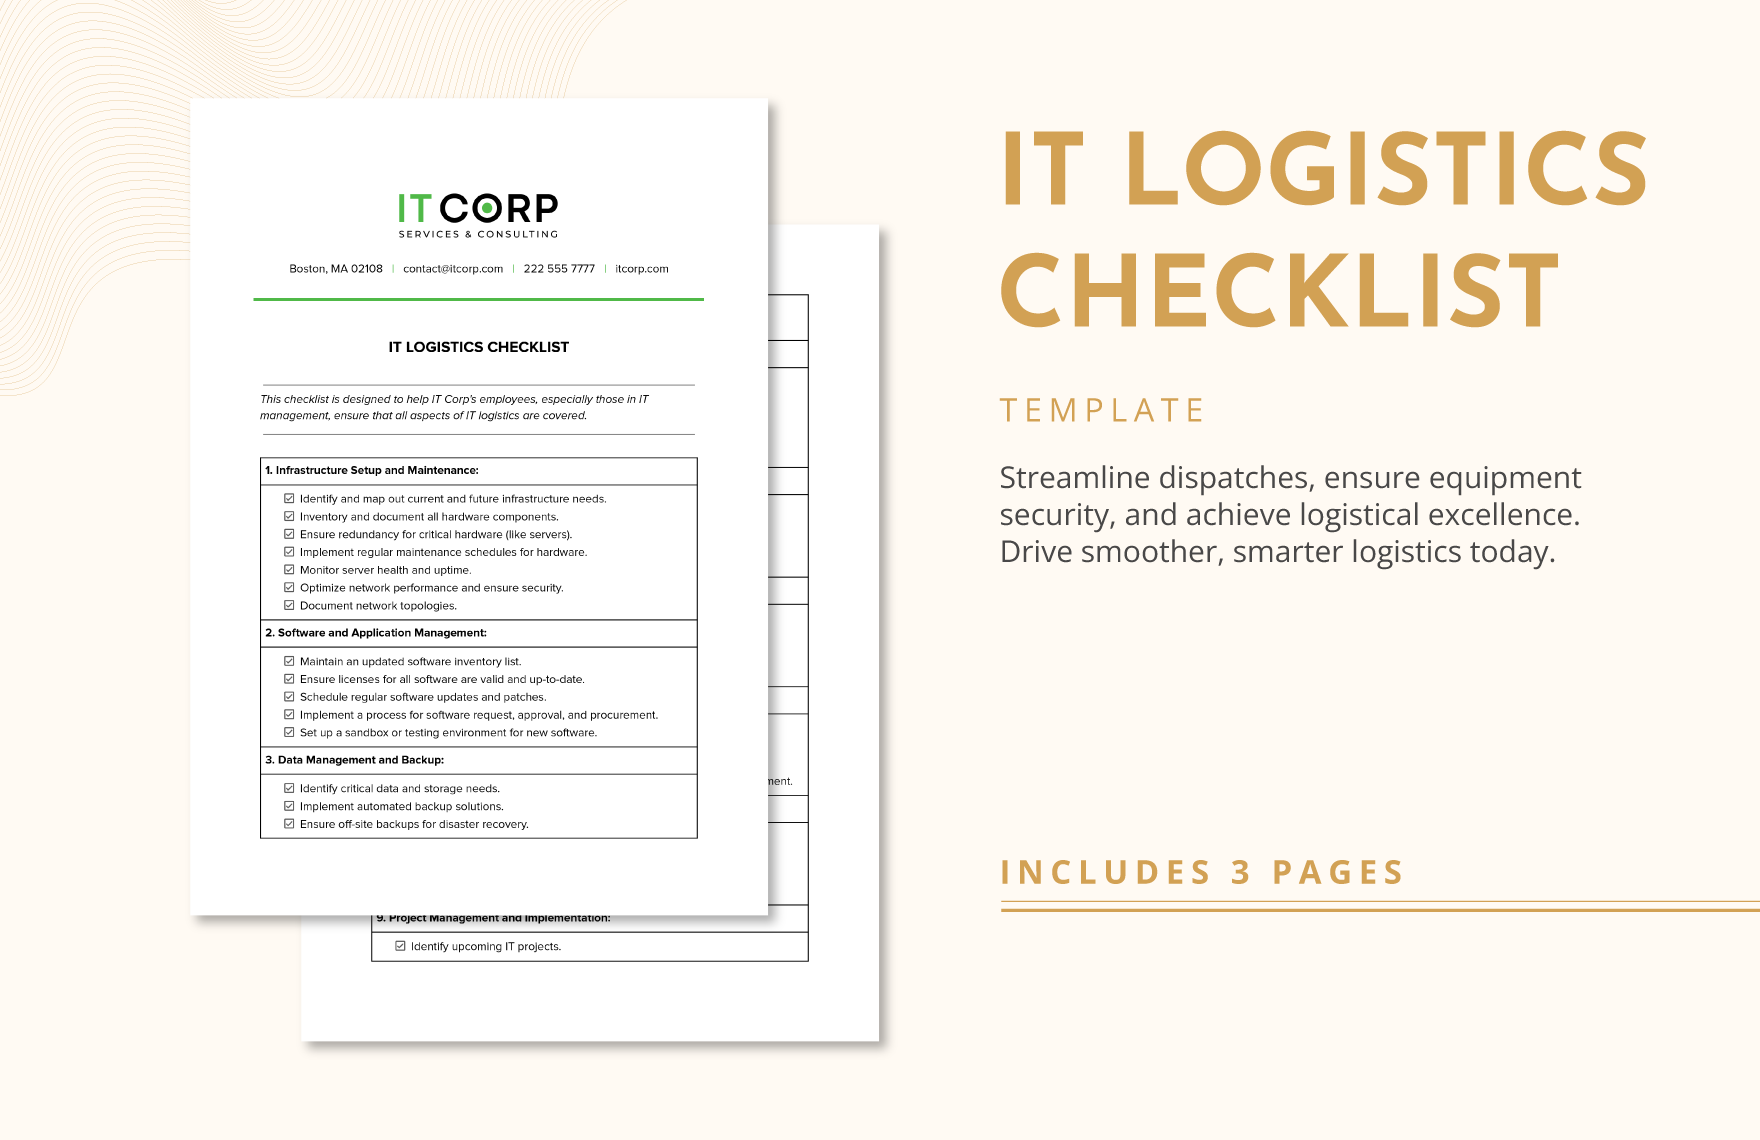 IT Logistics Checklist Template